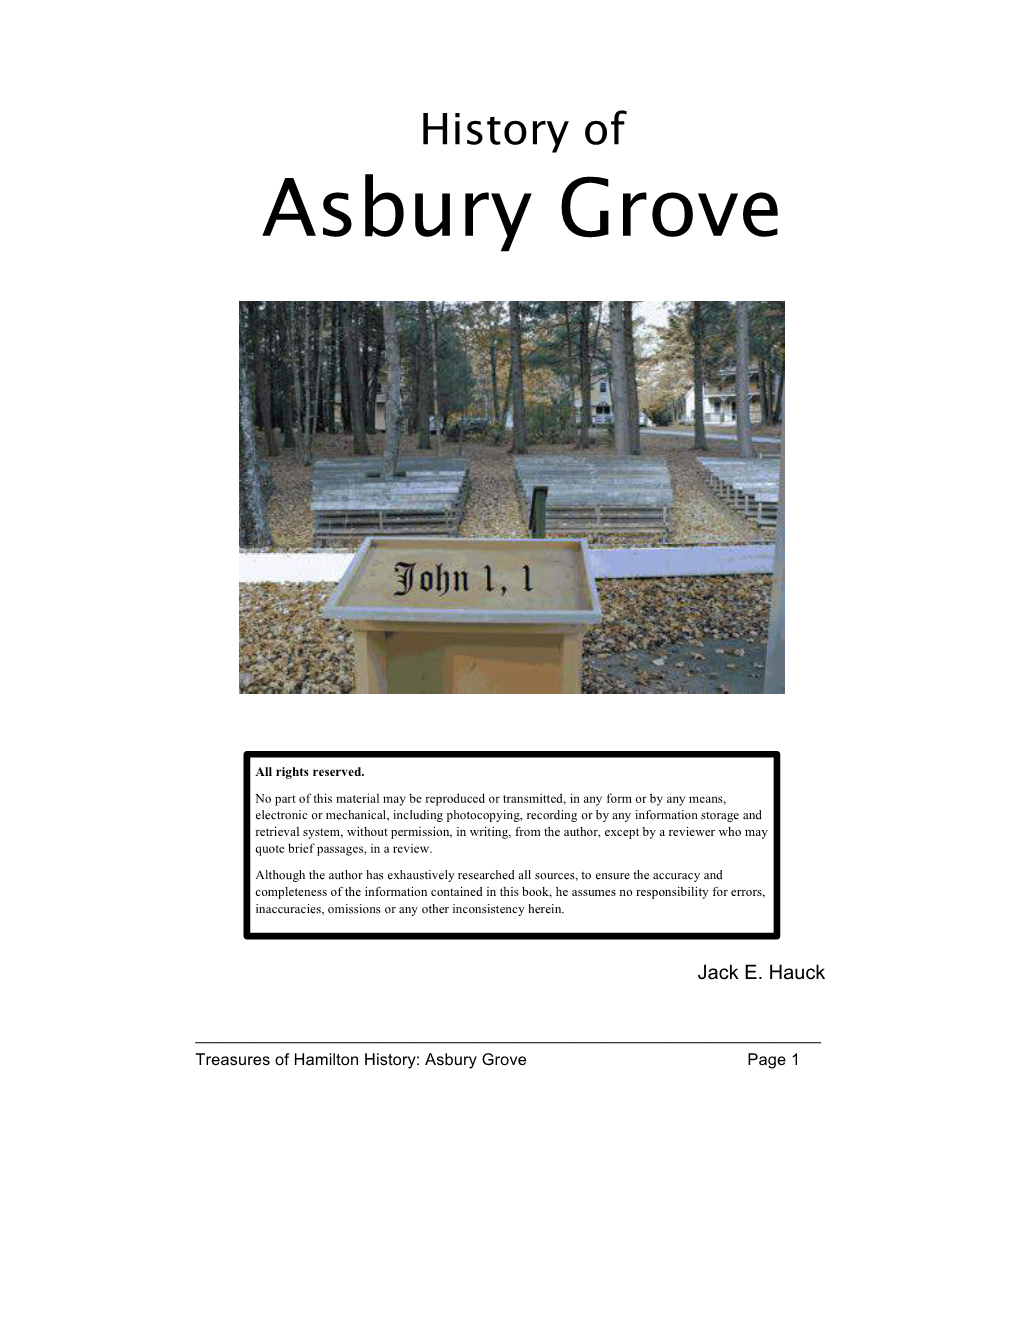 Asbury Grove